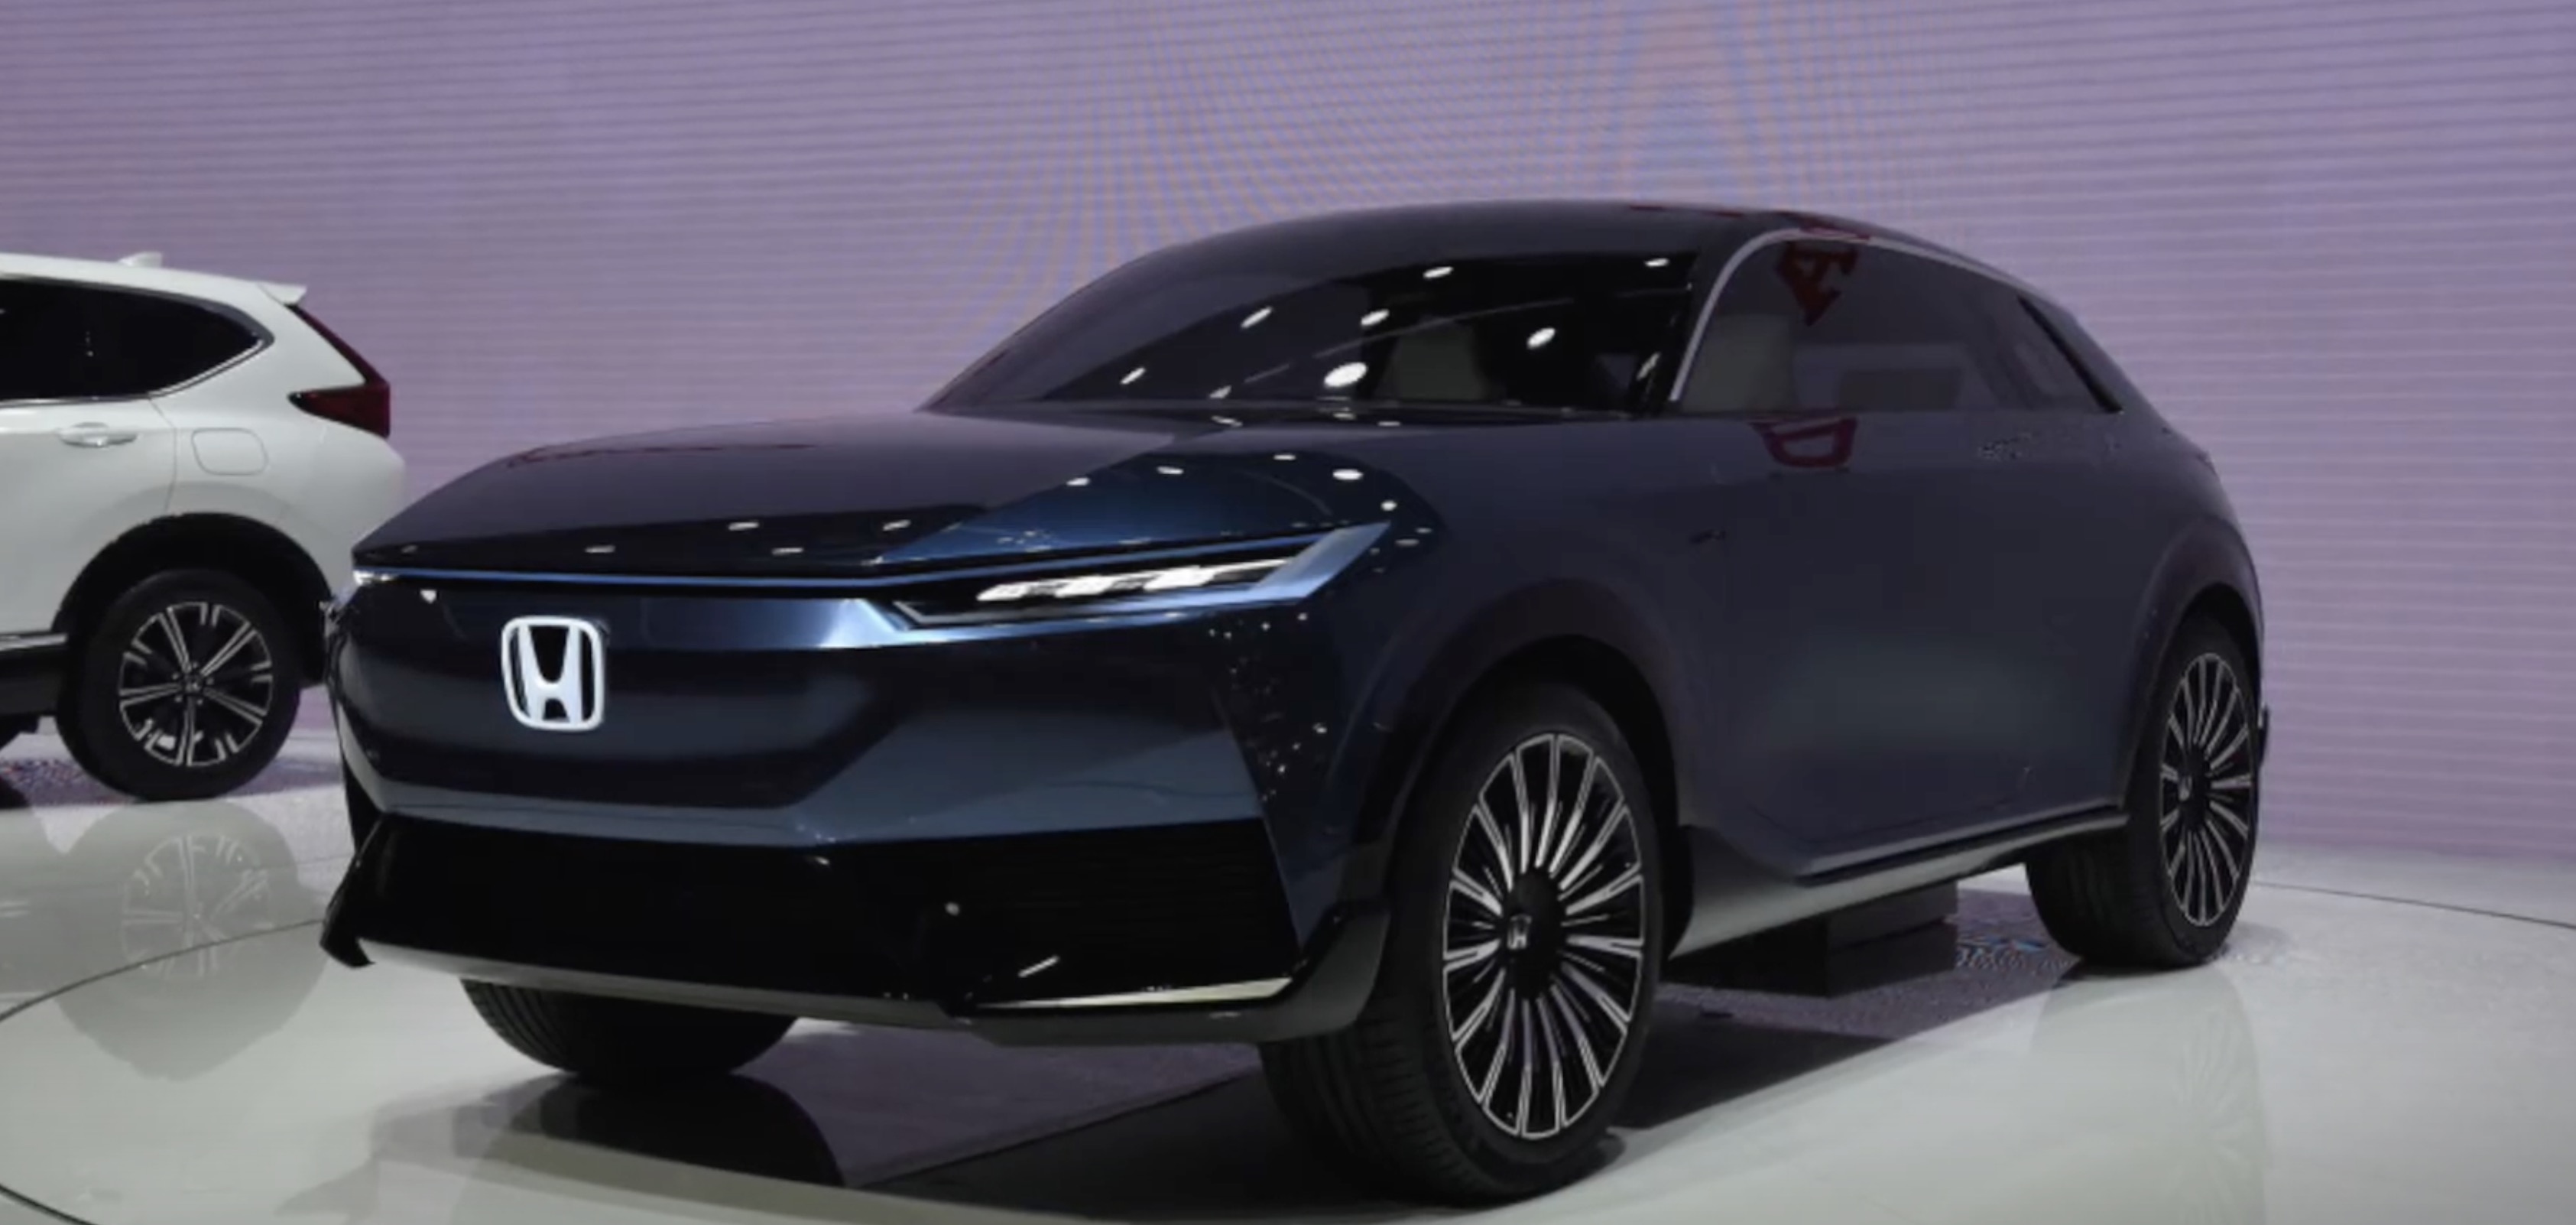 Honda unveils sleek new electric SUV concept, showing 'future mass ...